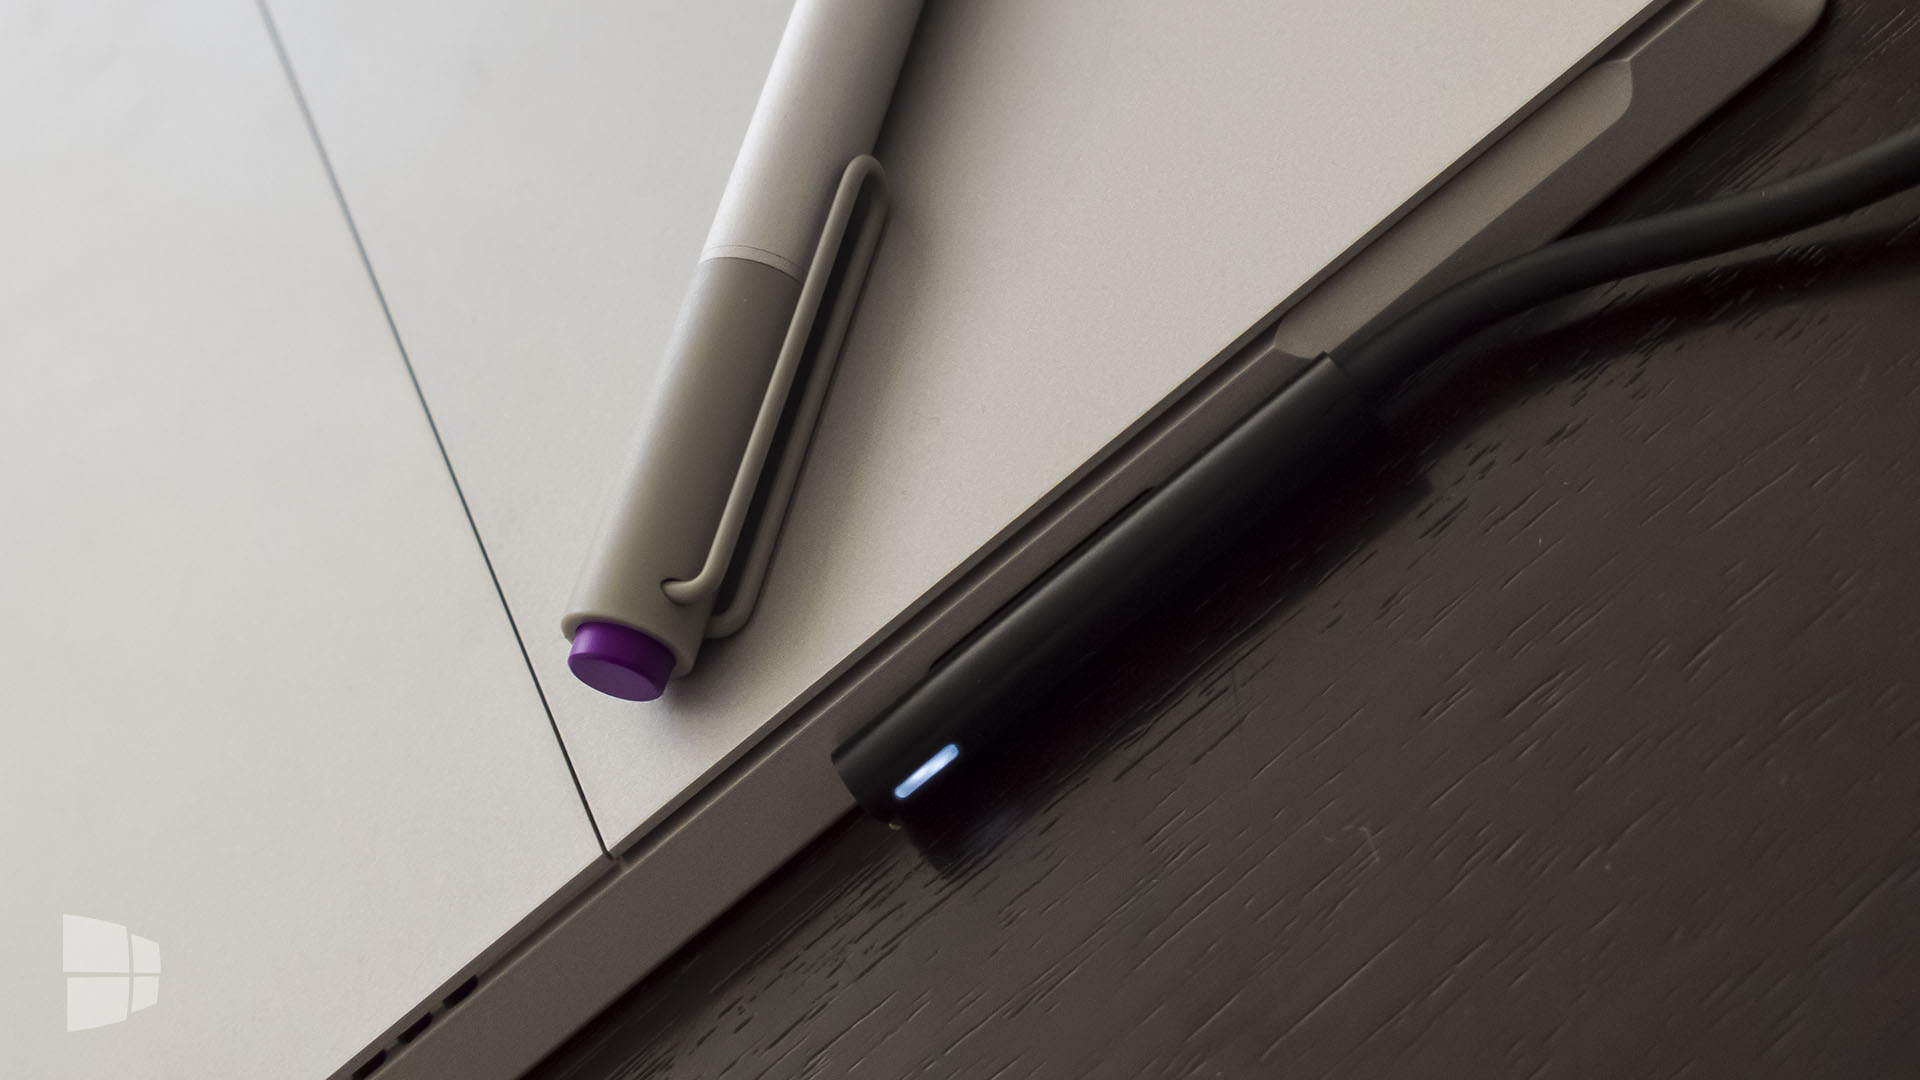 Surface Pro 3 battery bug